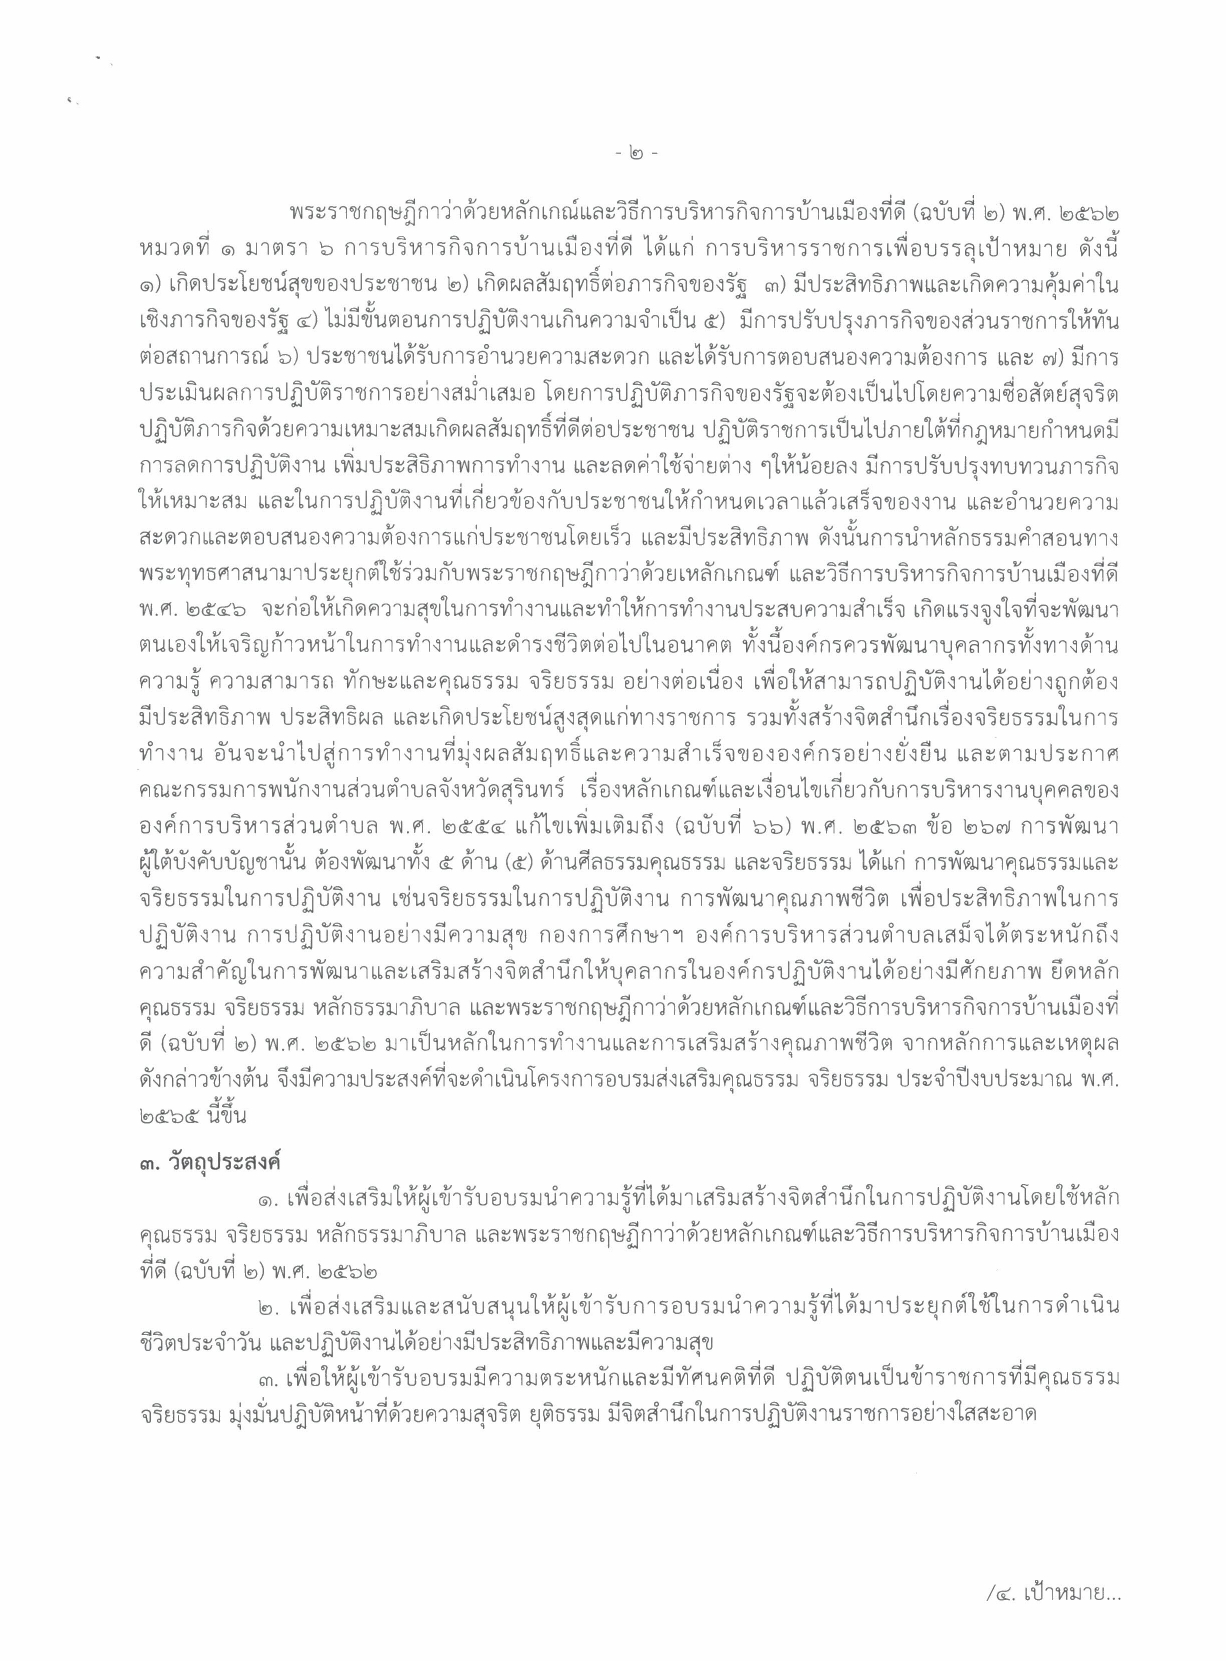 Krongkankunnatum2565 page 0002